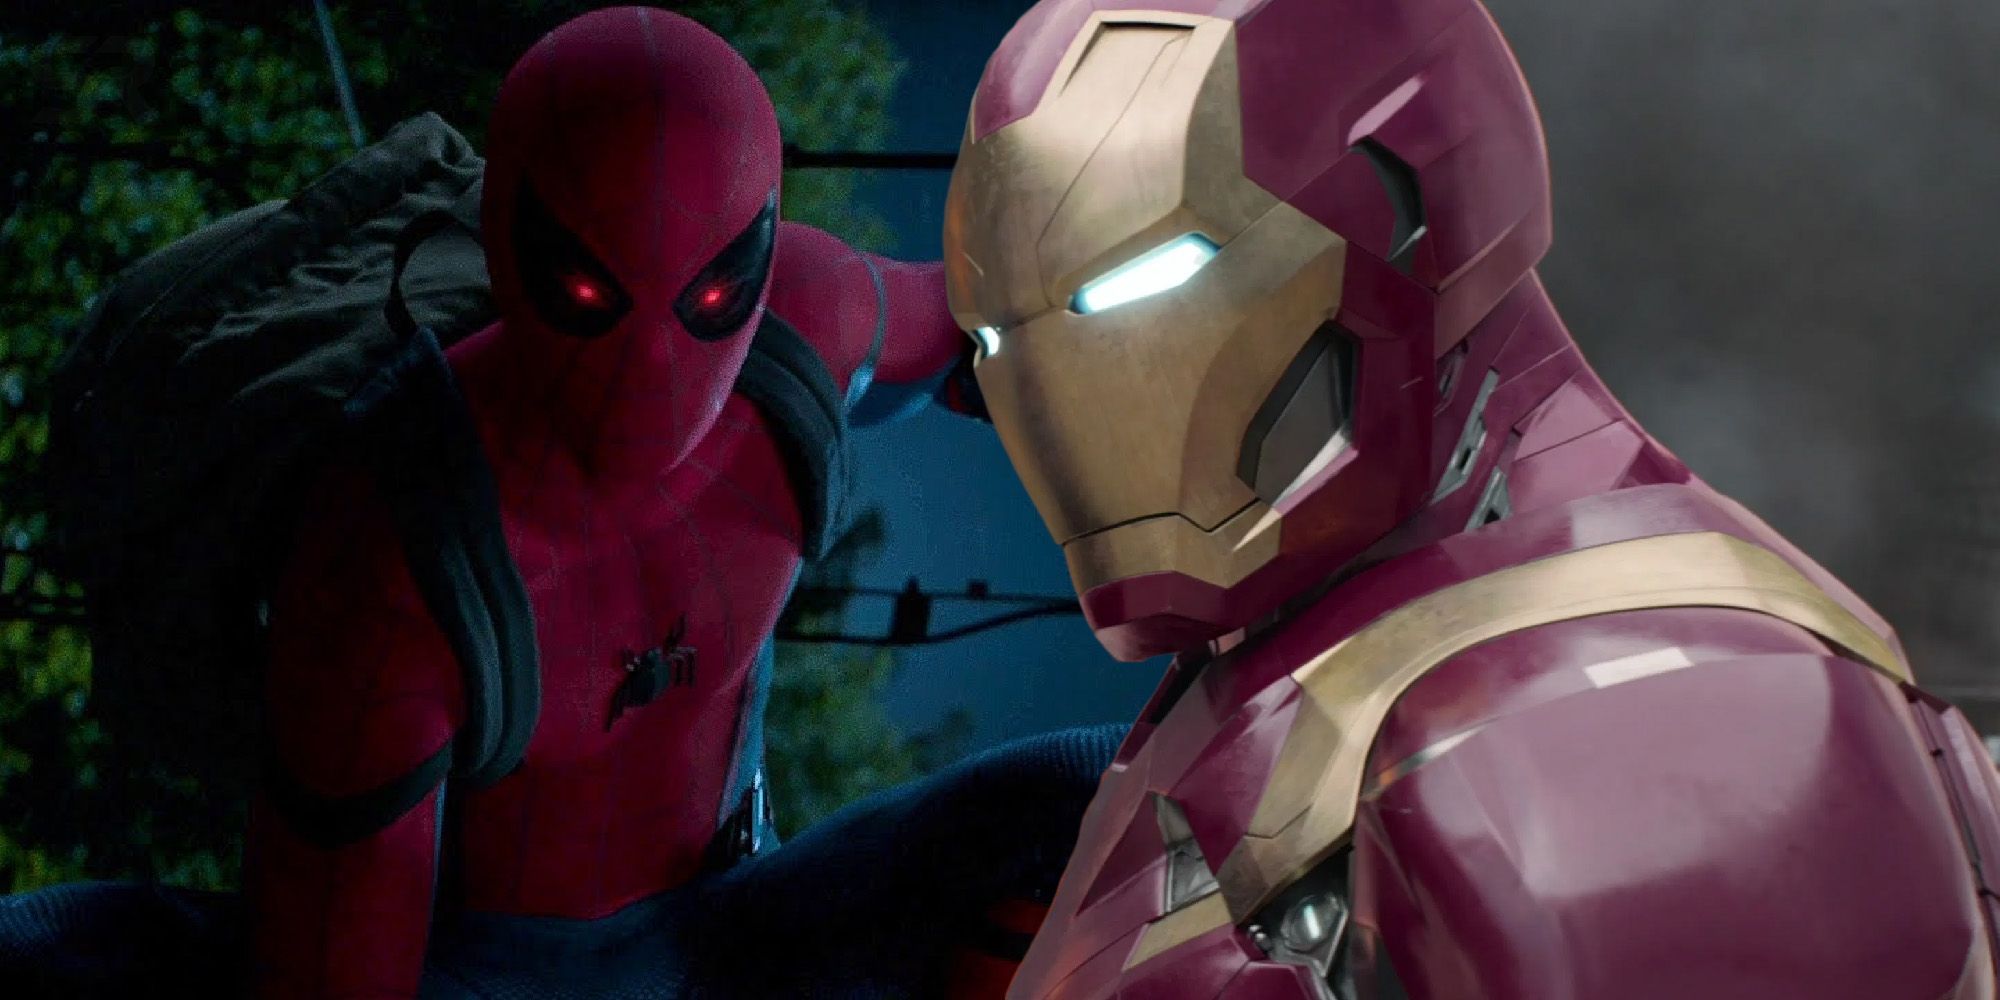 Iron man Captain America Civil War Spiderman Homecoming kill mode